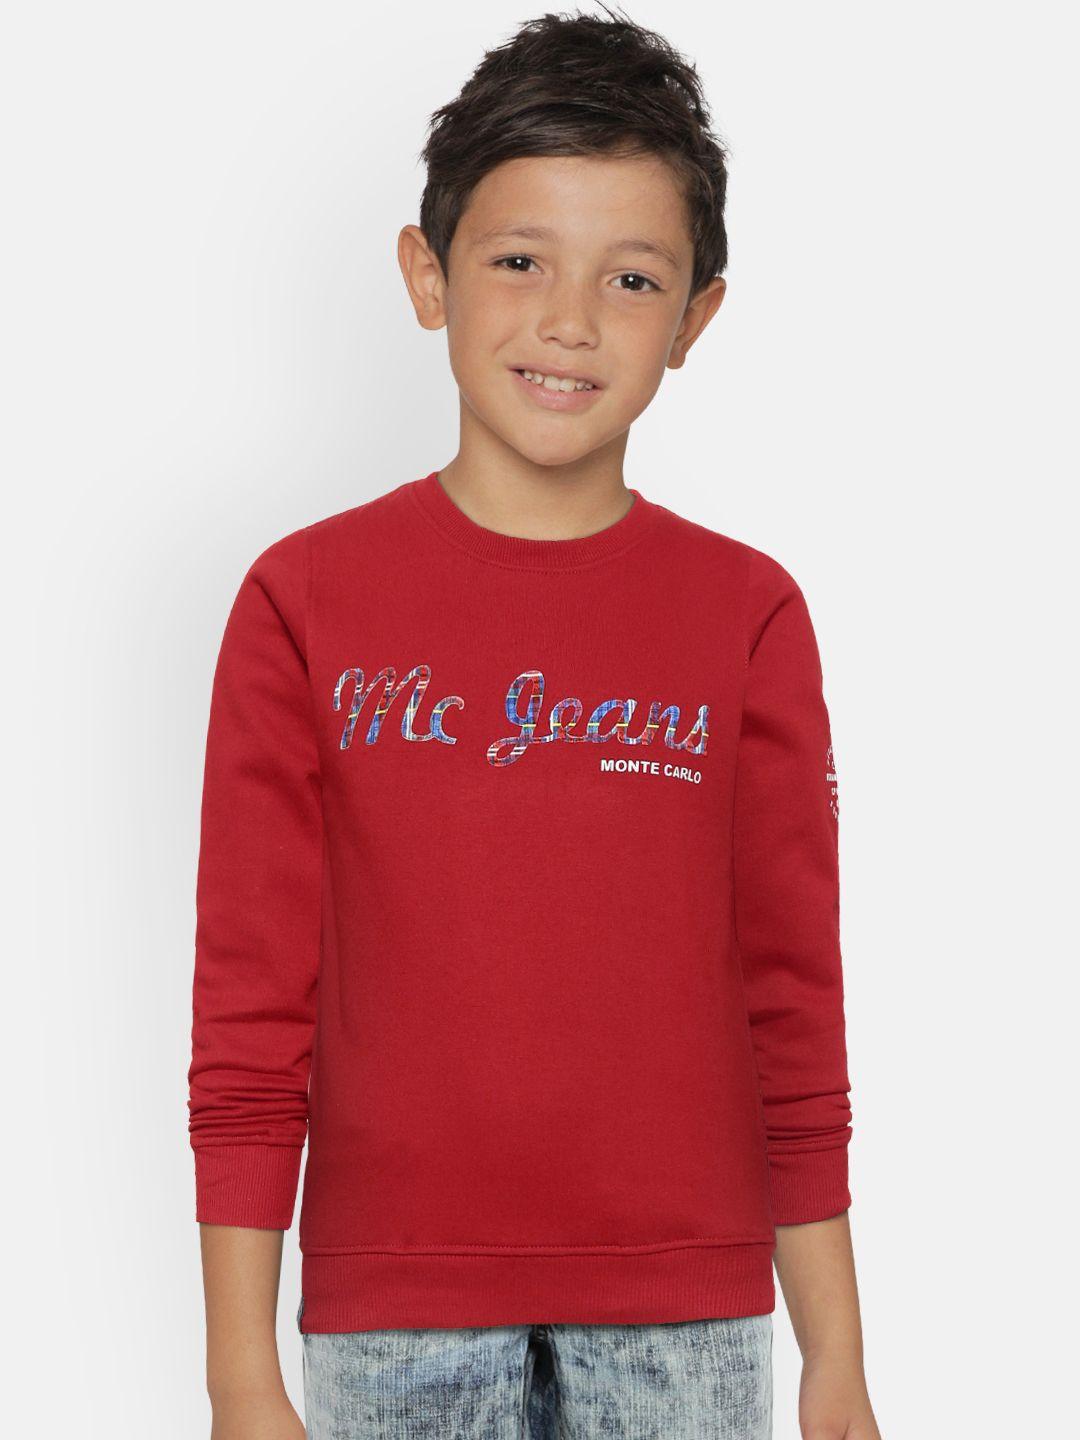 monte carlo boys red printed sweatshirt